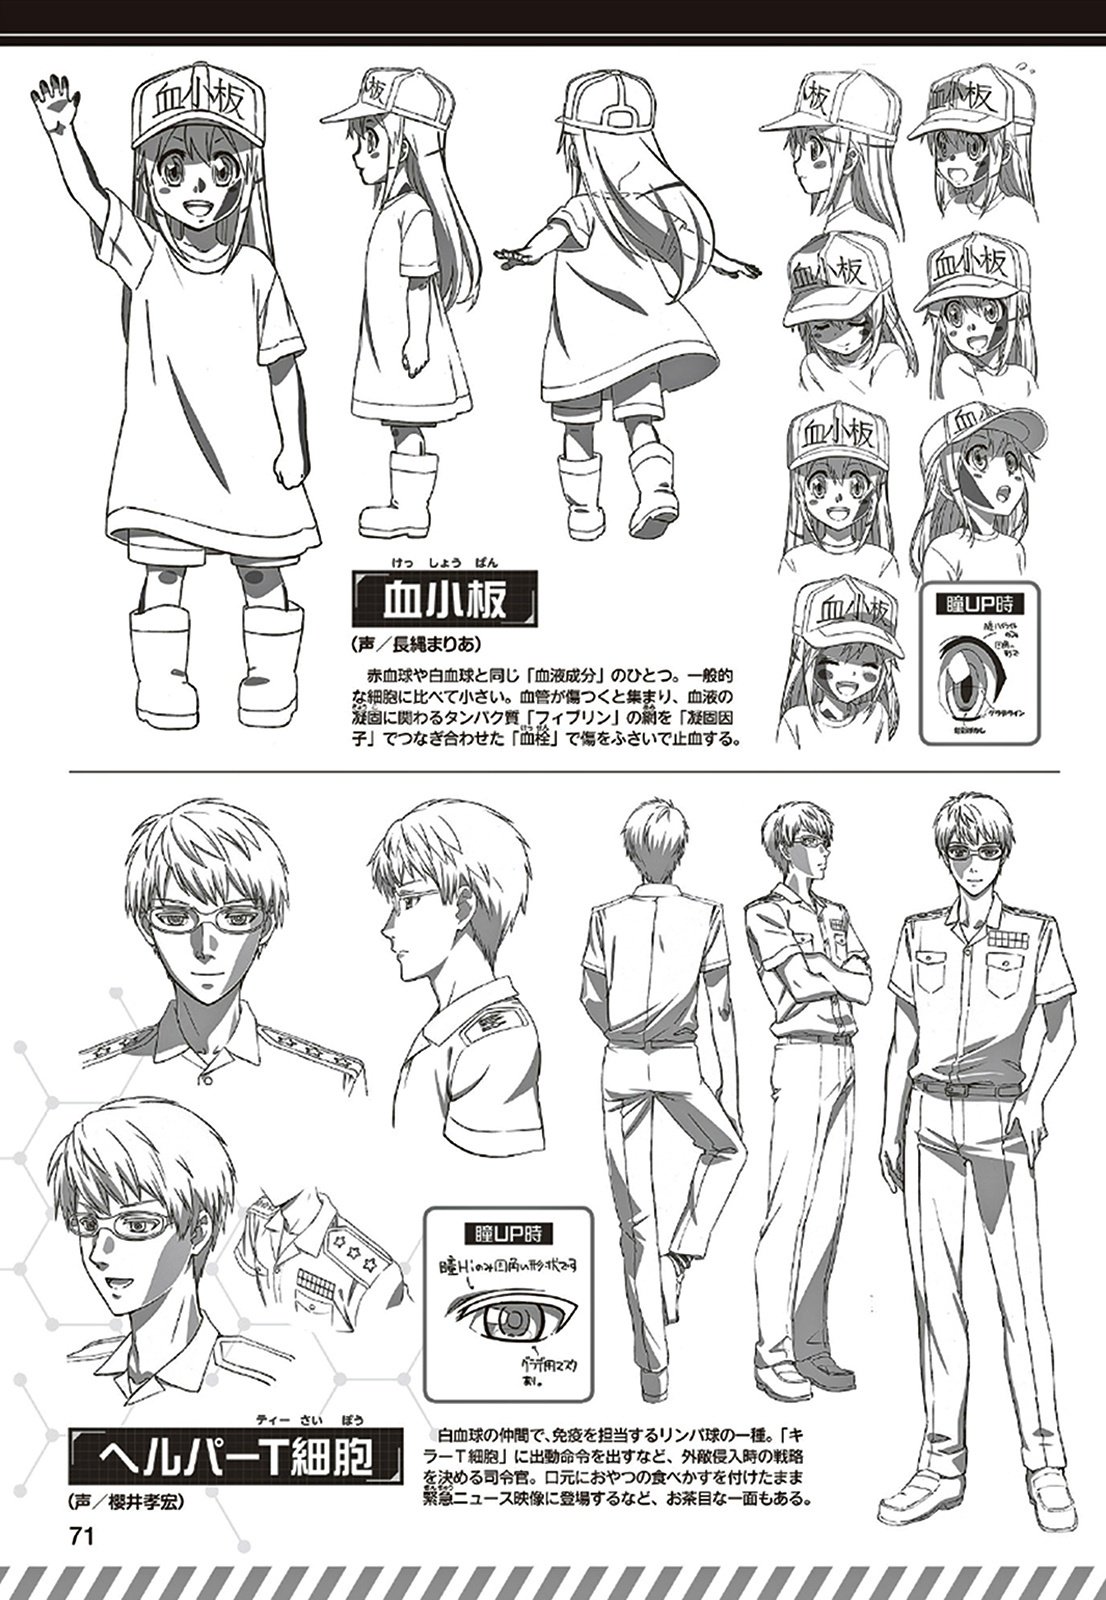 ZeroDS. on X: Hataraku Saibou Anime character designs.    / X